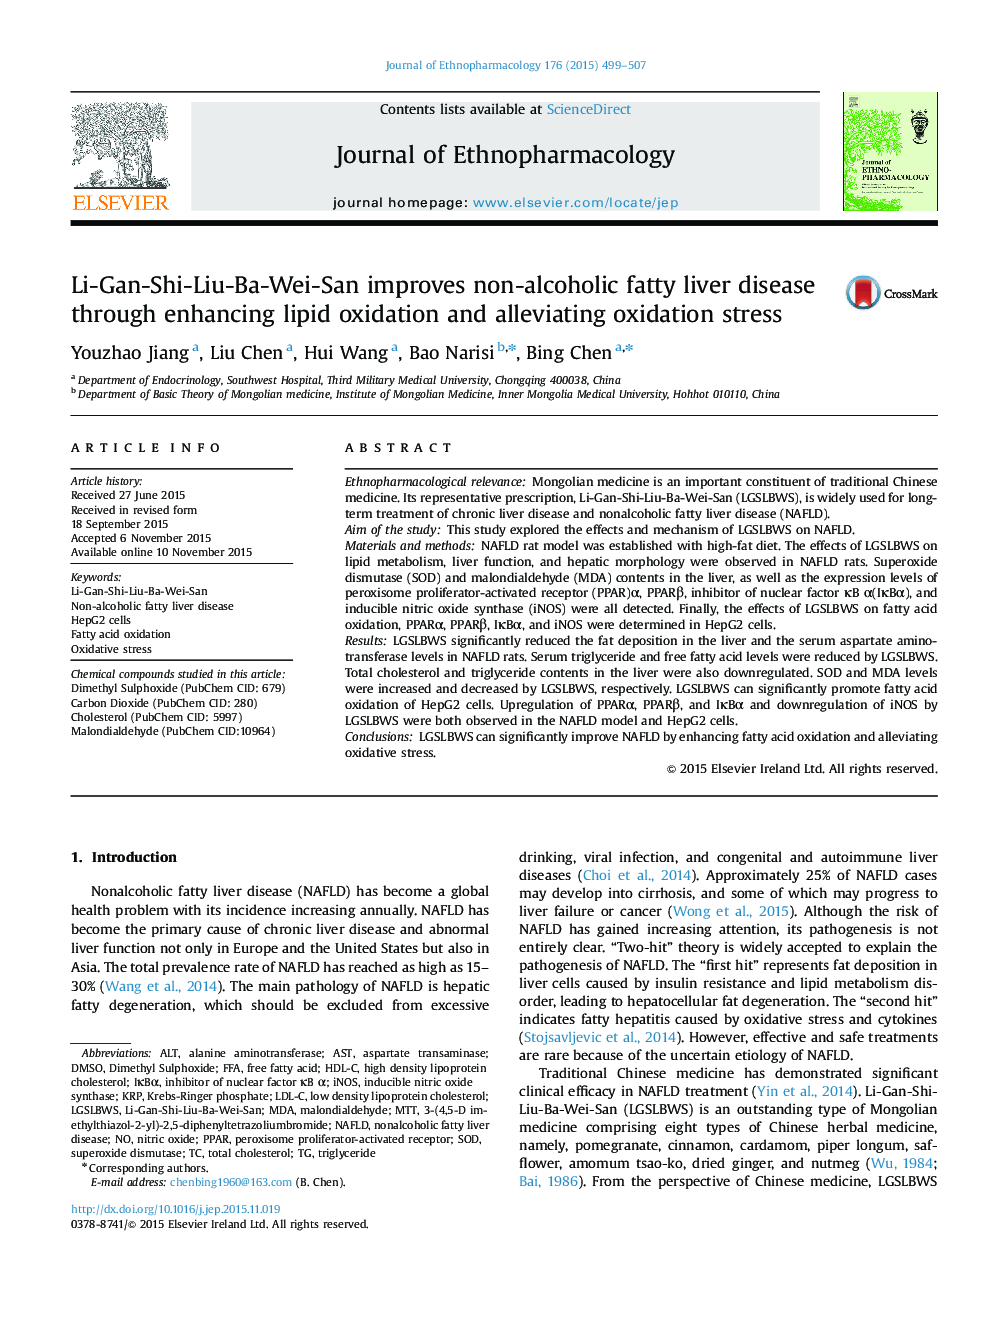 Li-Gan-Shi-Liu-Ba-Wei-San improves non-alcoholic fatty liver disease through enhancing lipid oxidation and alleviating oxidation stress